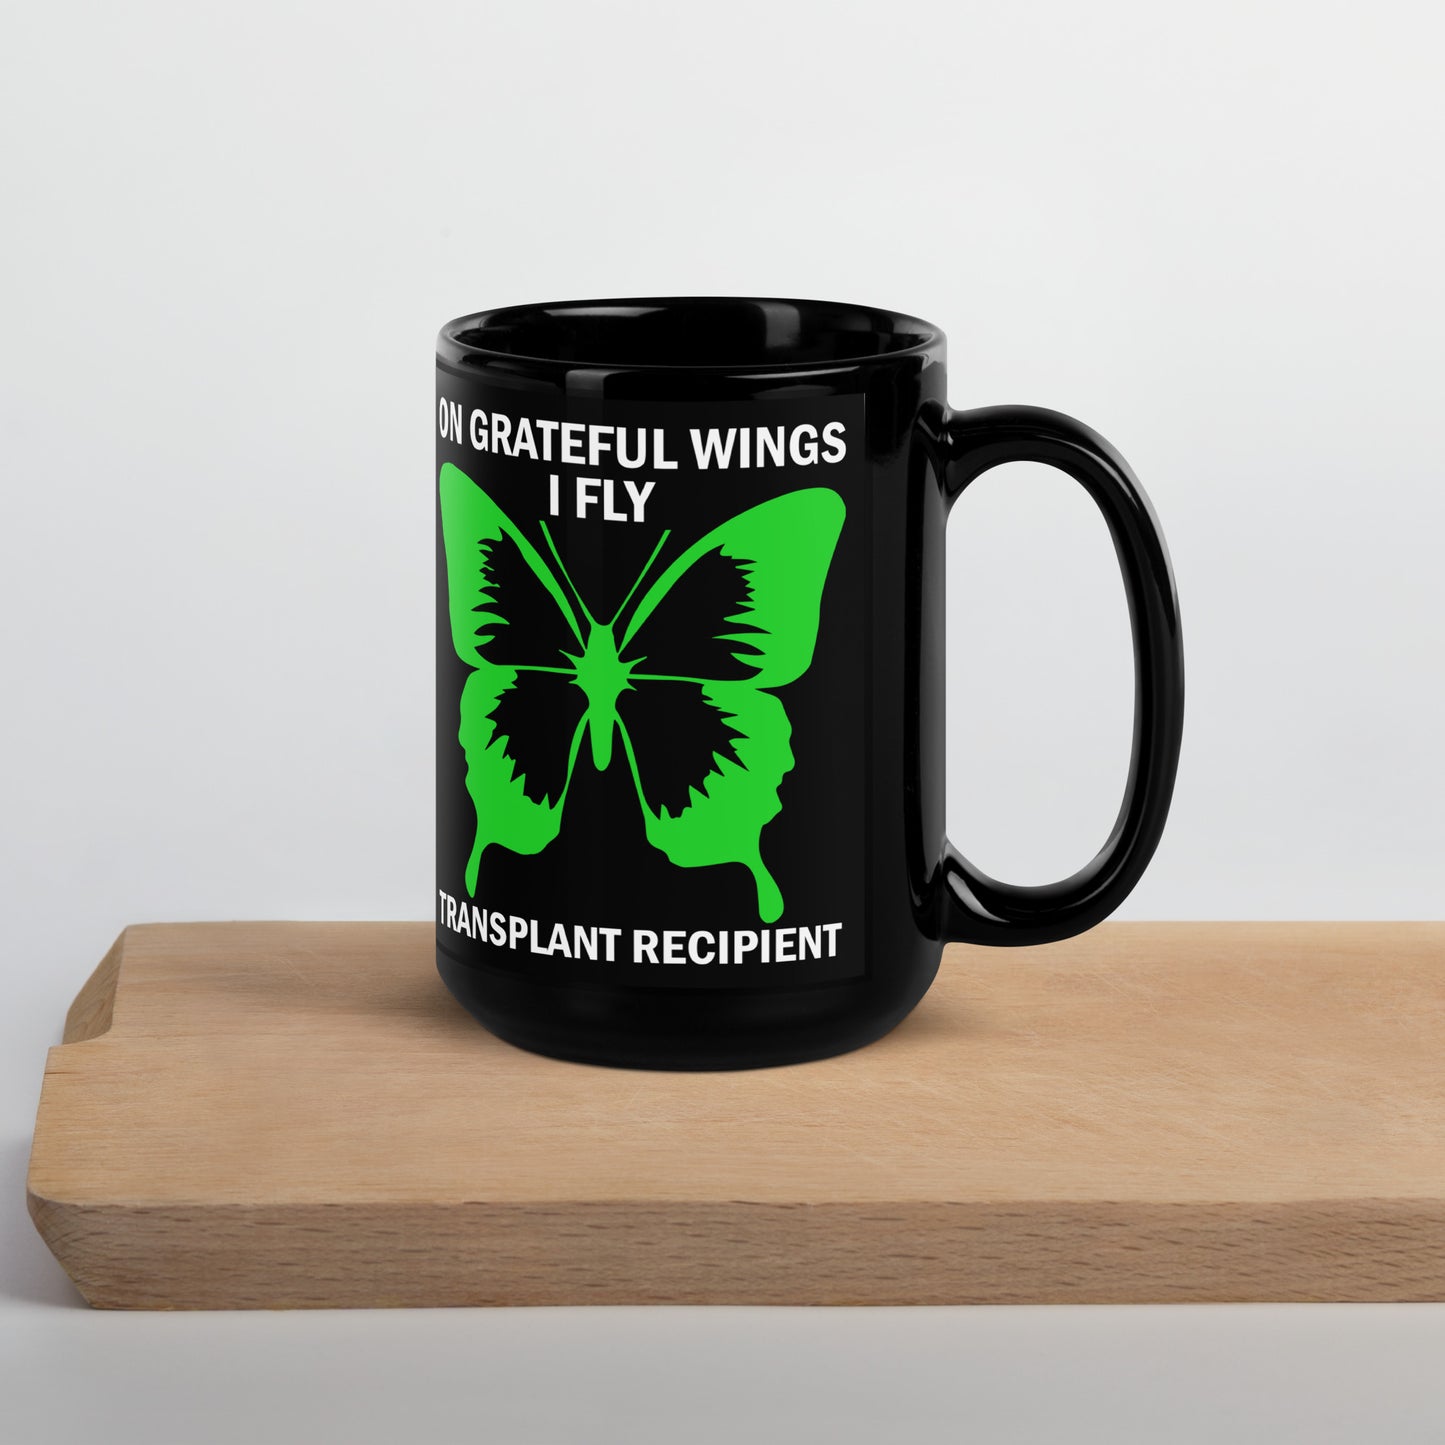 On Grateful Wings I Fly Kidney Recipient Ceramic Coffee Mug